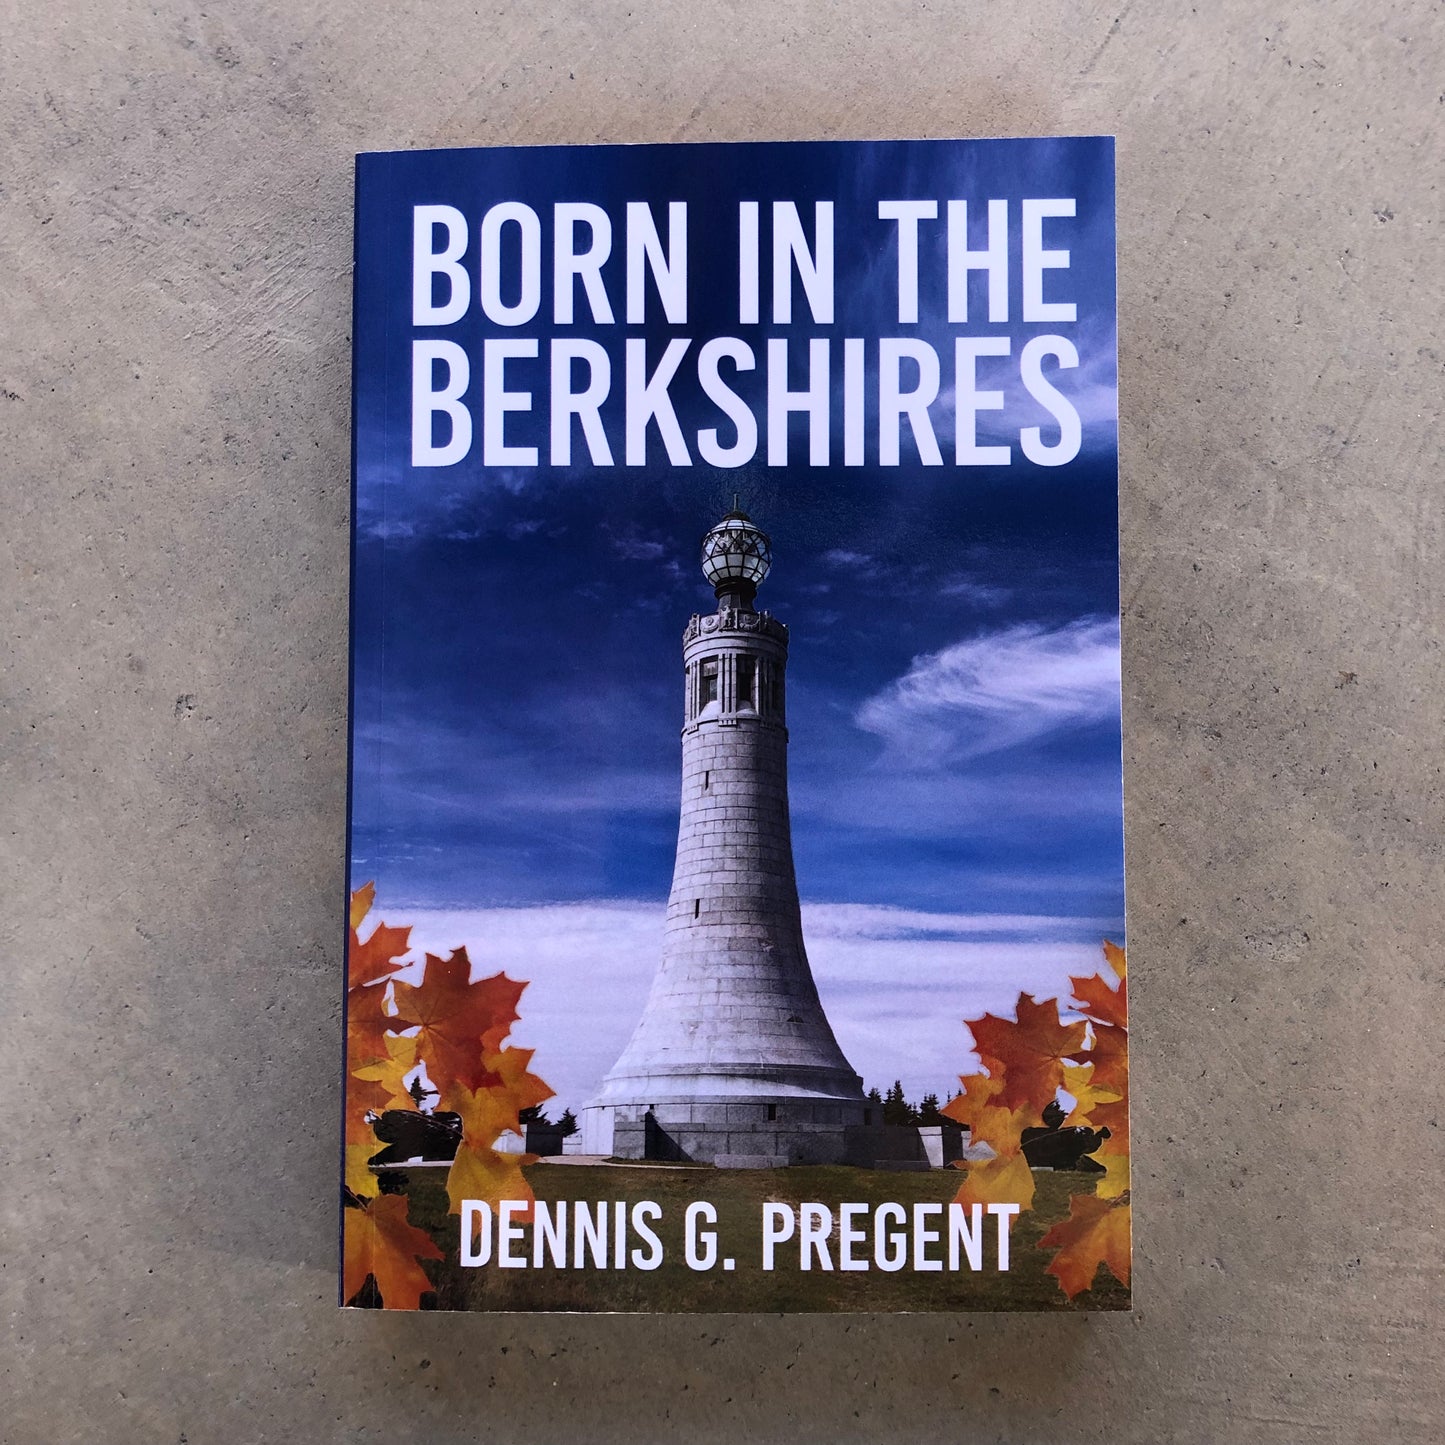 Born in the Berkshires